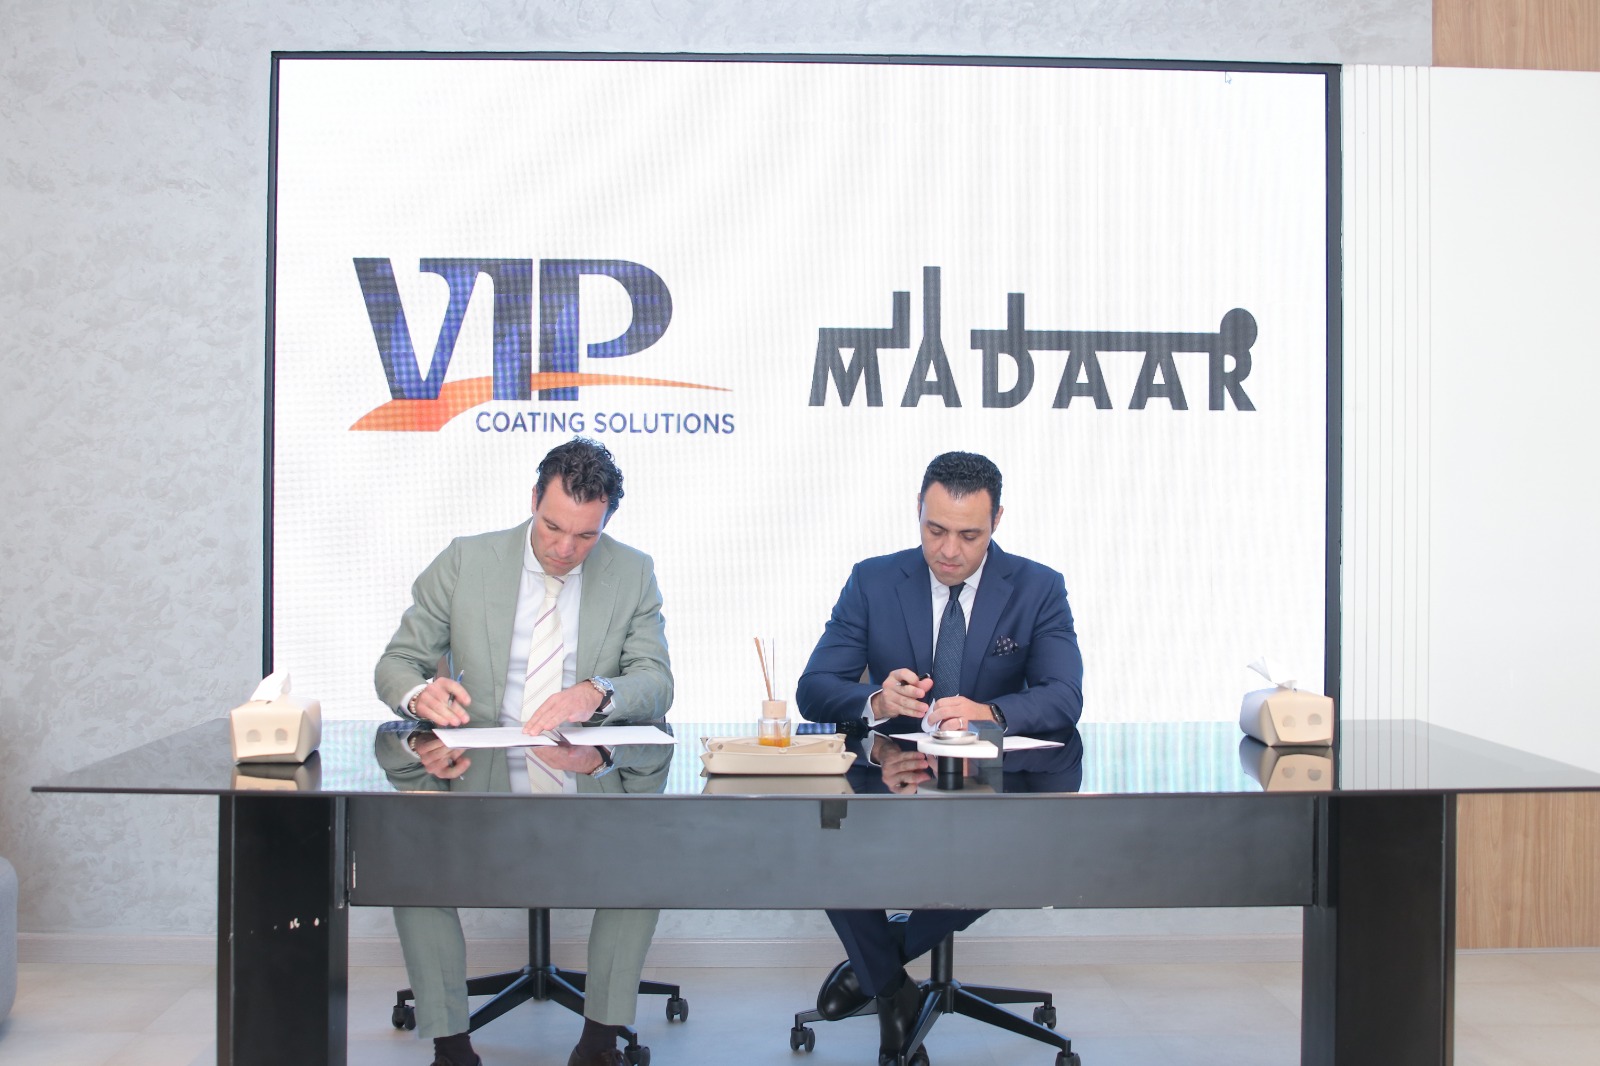 مدار" و"VIP Coating Solutions" توقعان اتفاقية شراكة مدتها 10 سنوات